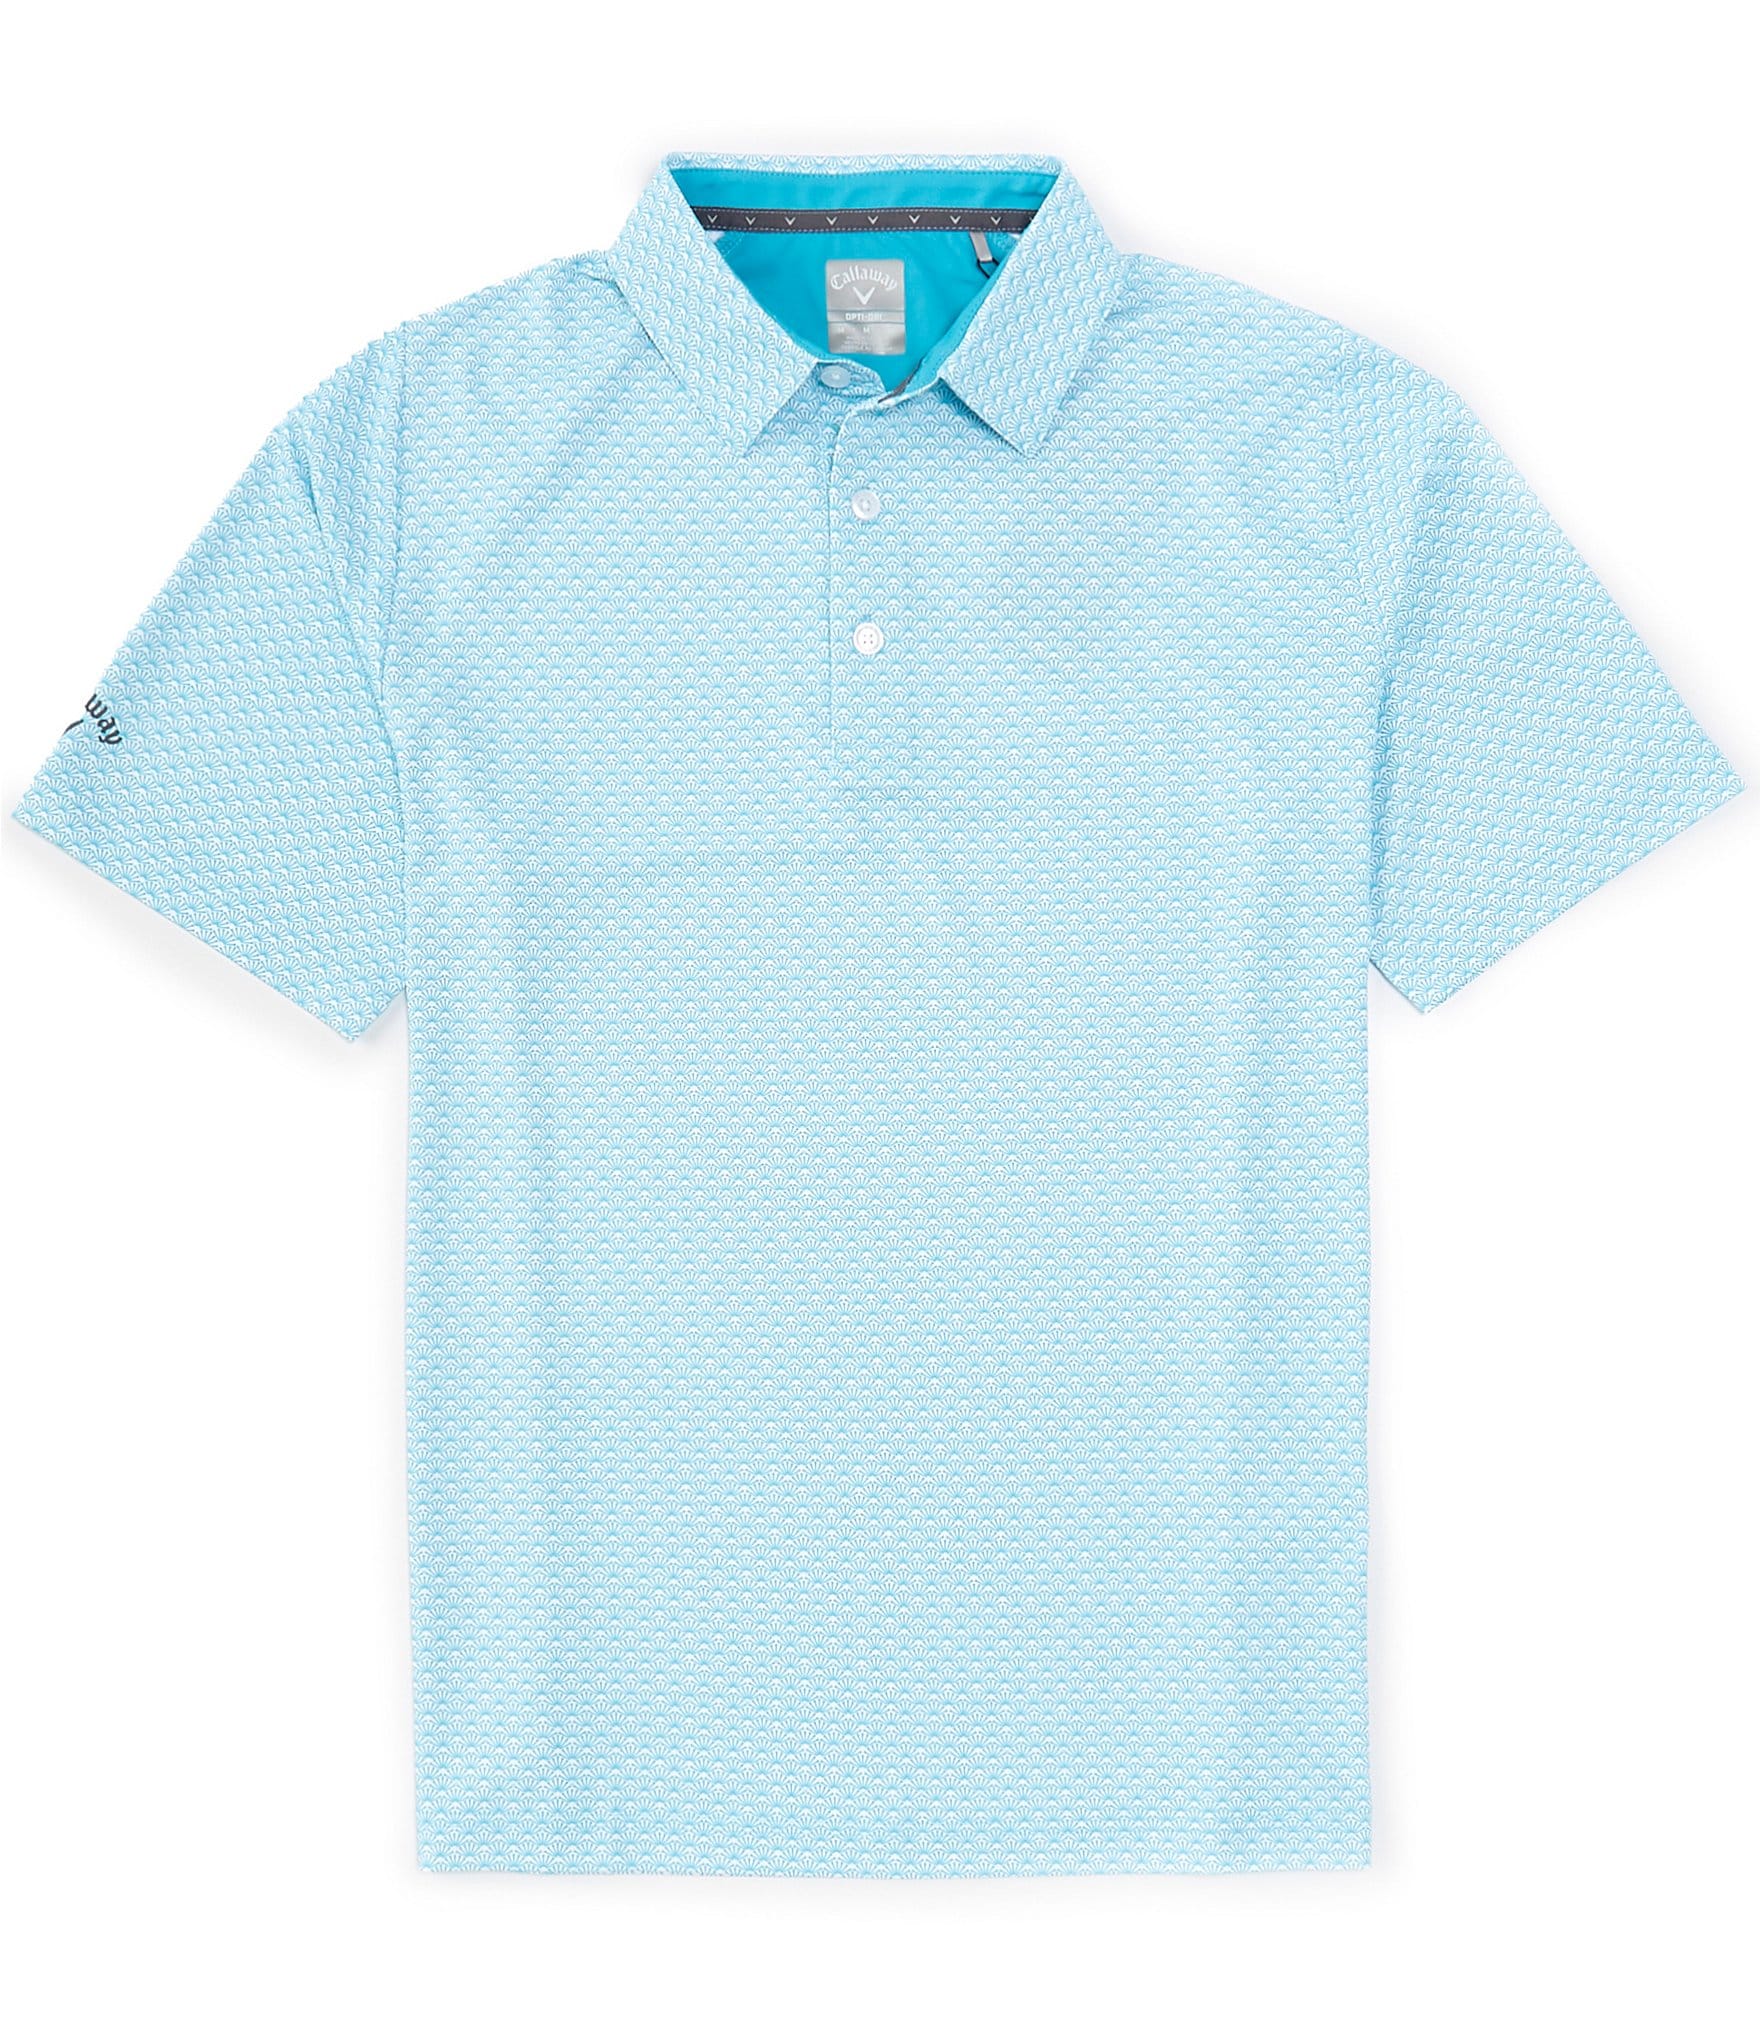 Callaway Short Sleeve Novelty Printed Polo Shirt | Dillard's